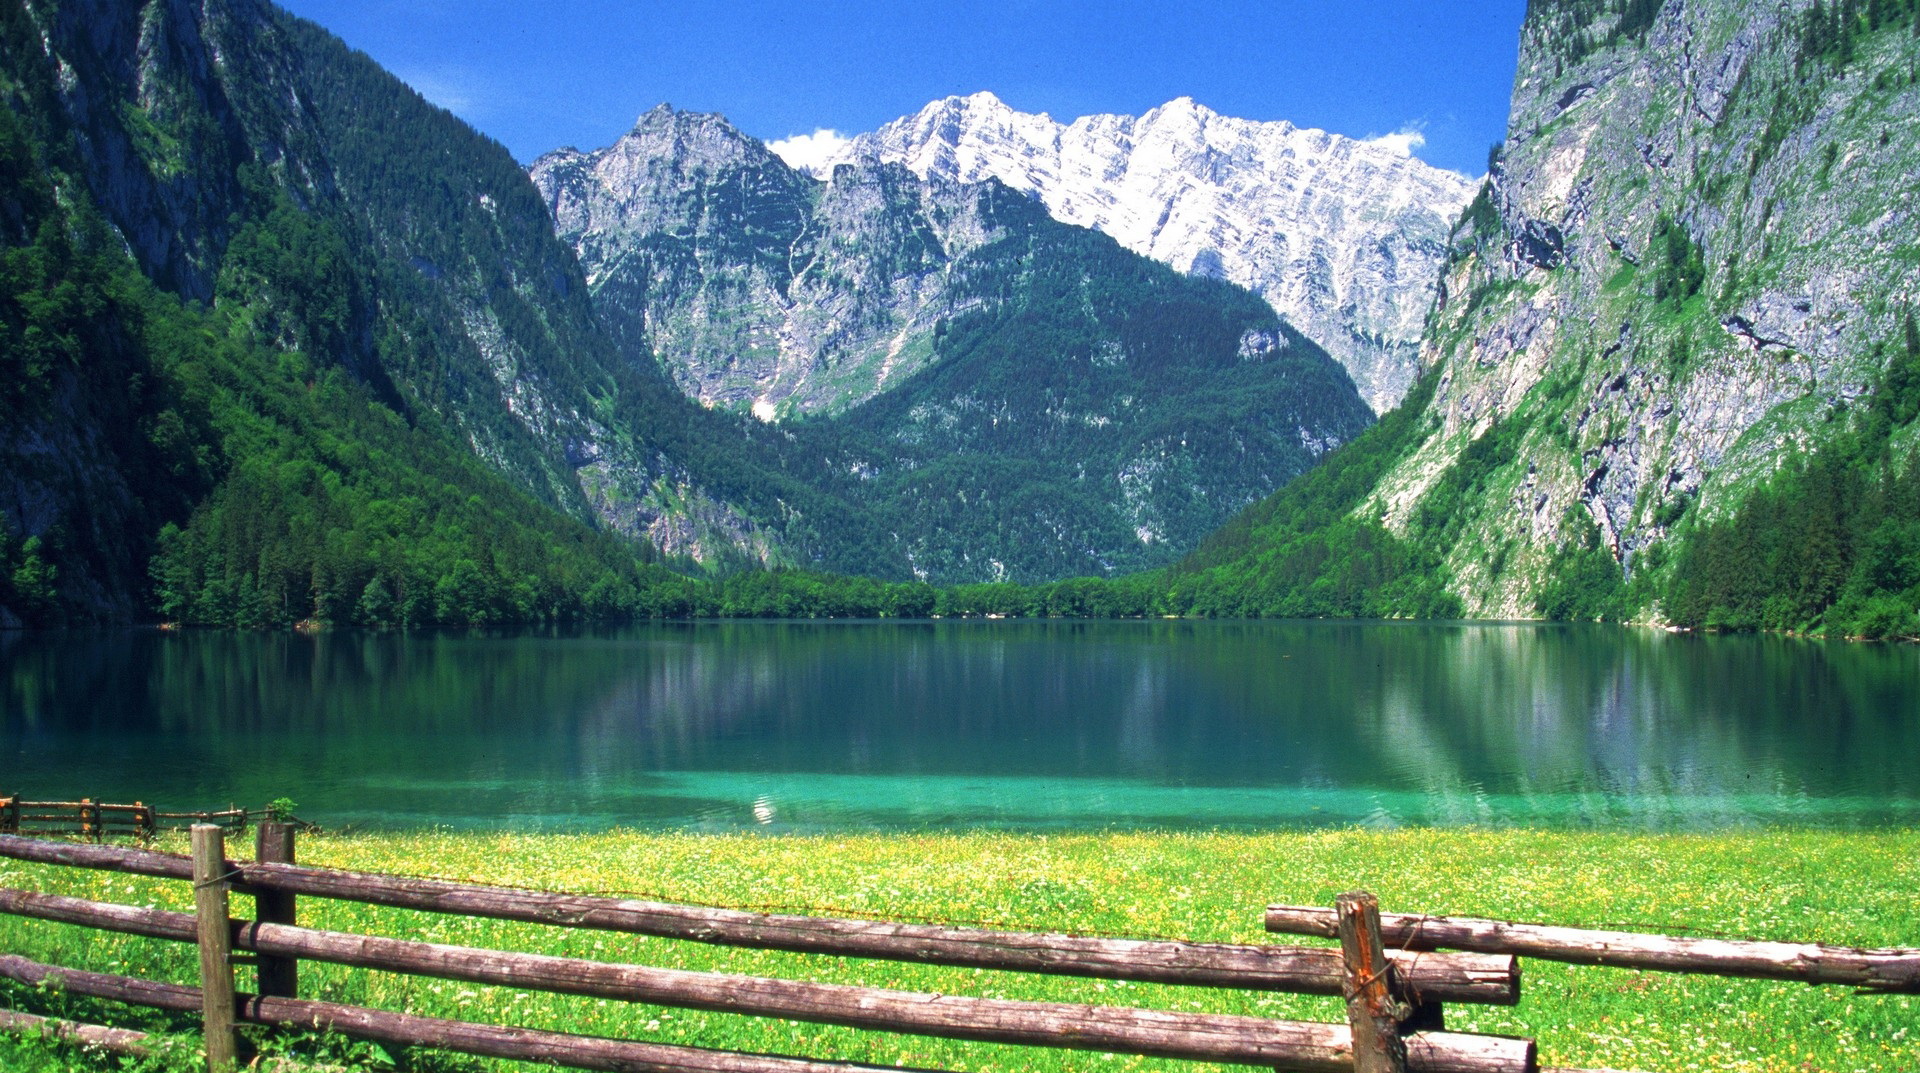 This Hd Nature Wallpaper Will Make You Love Nature - Obersee Lake - HD Wallpaper 